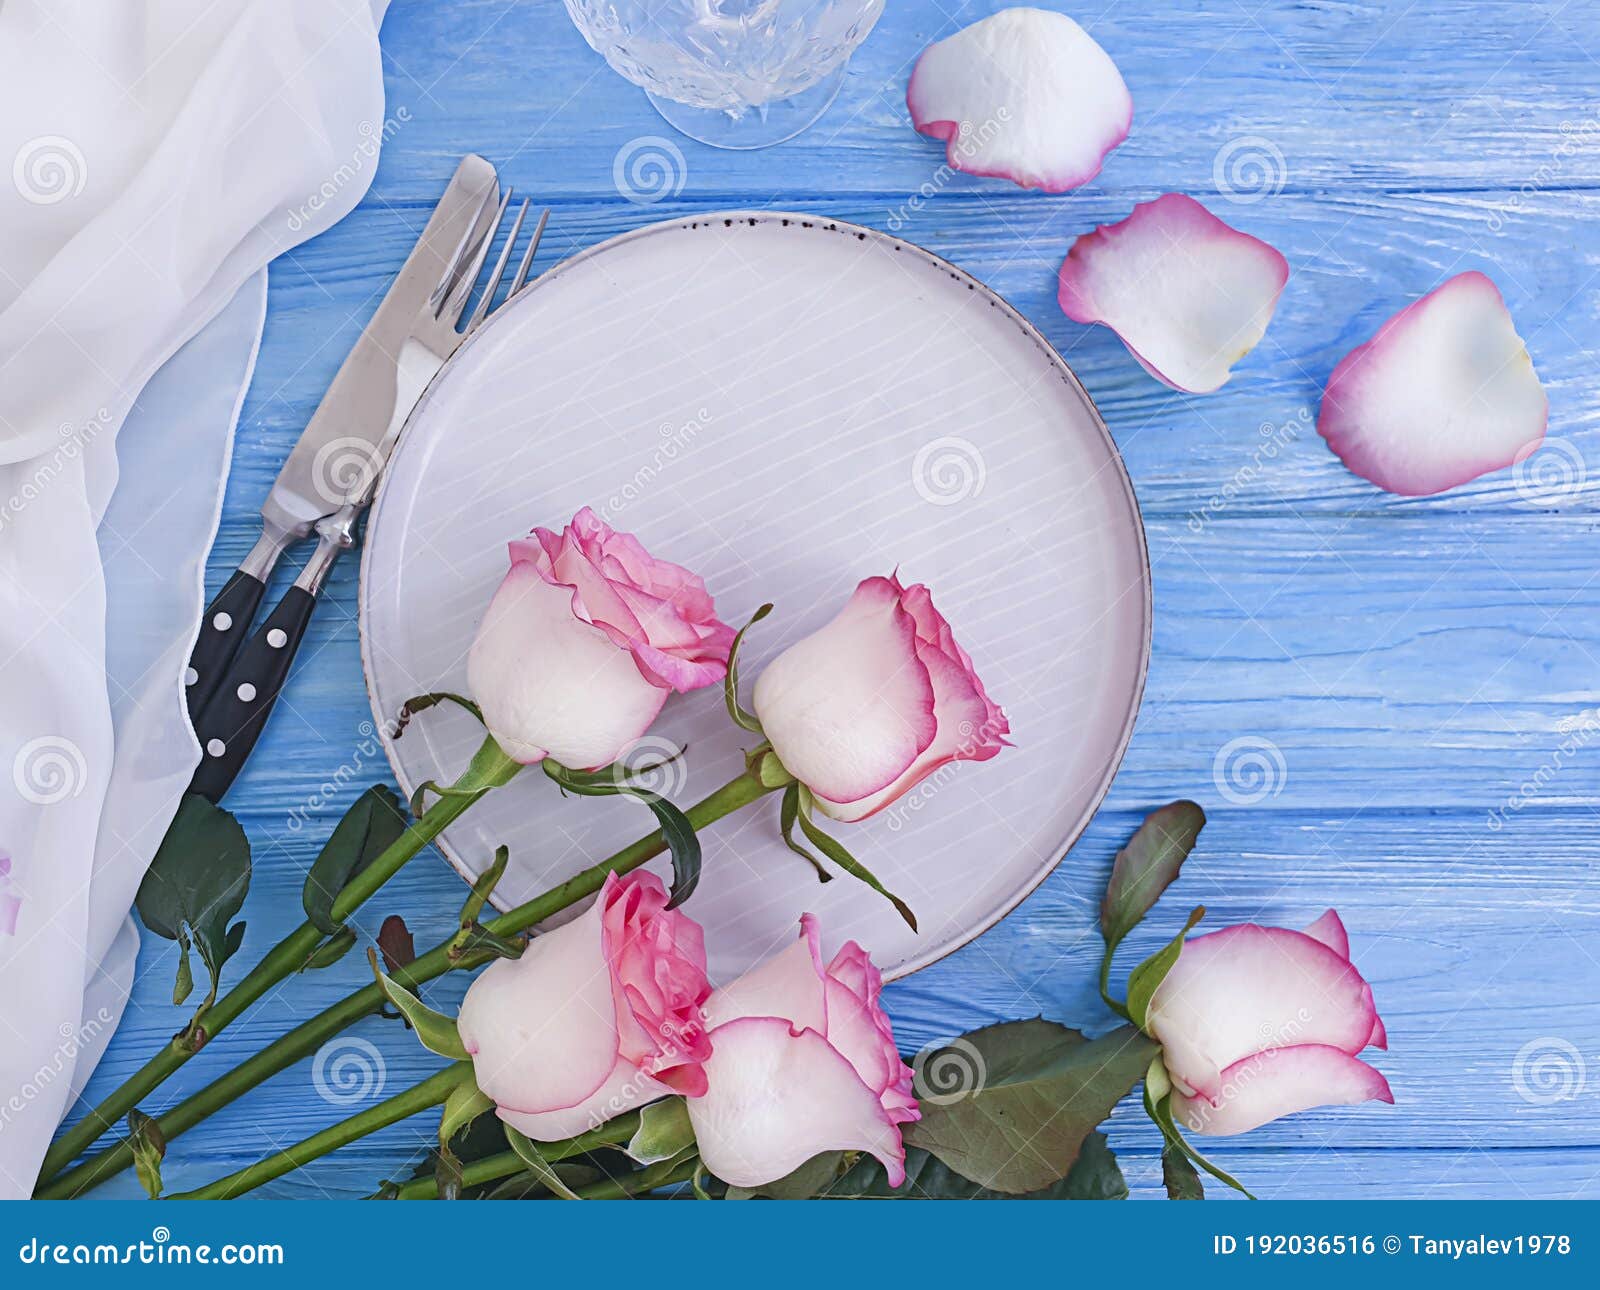 plate flower rose wooden backgroundn elegance rustic